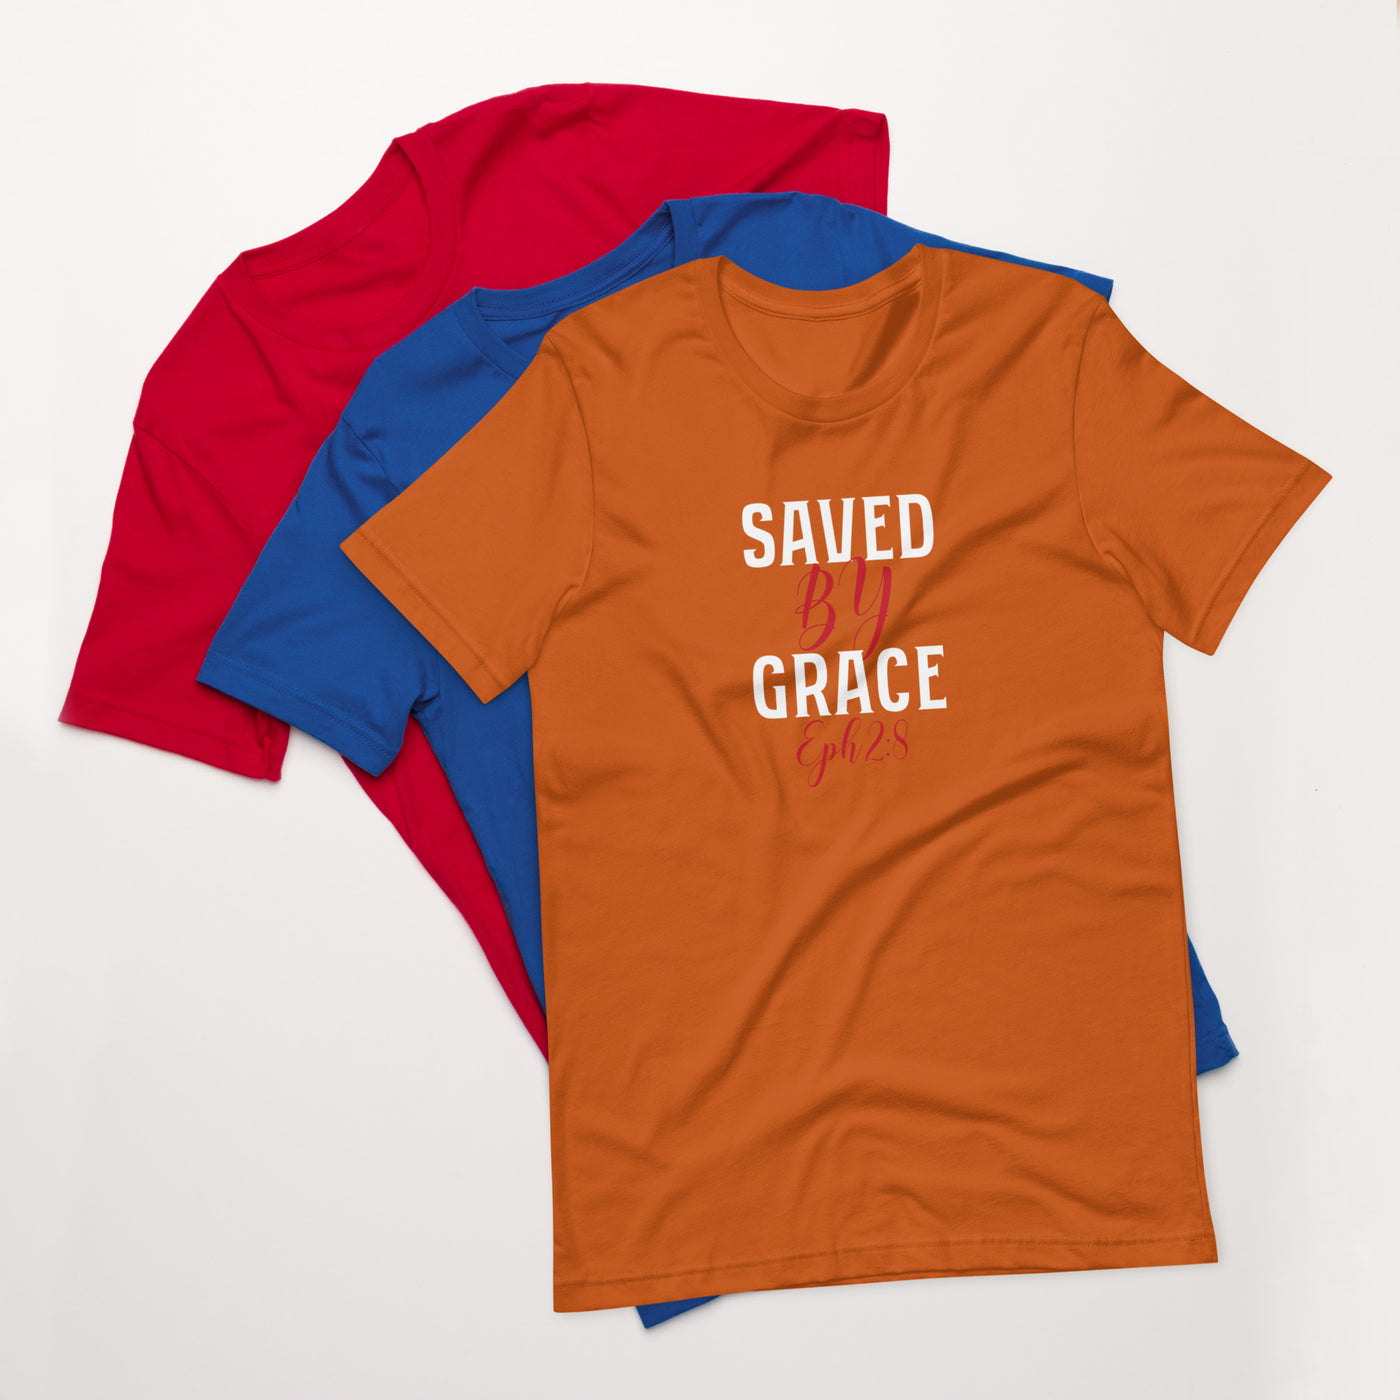 F&H Saved By Grace Ephesians 2:8 T-shirt